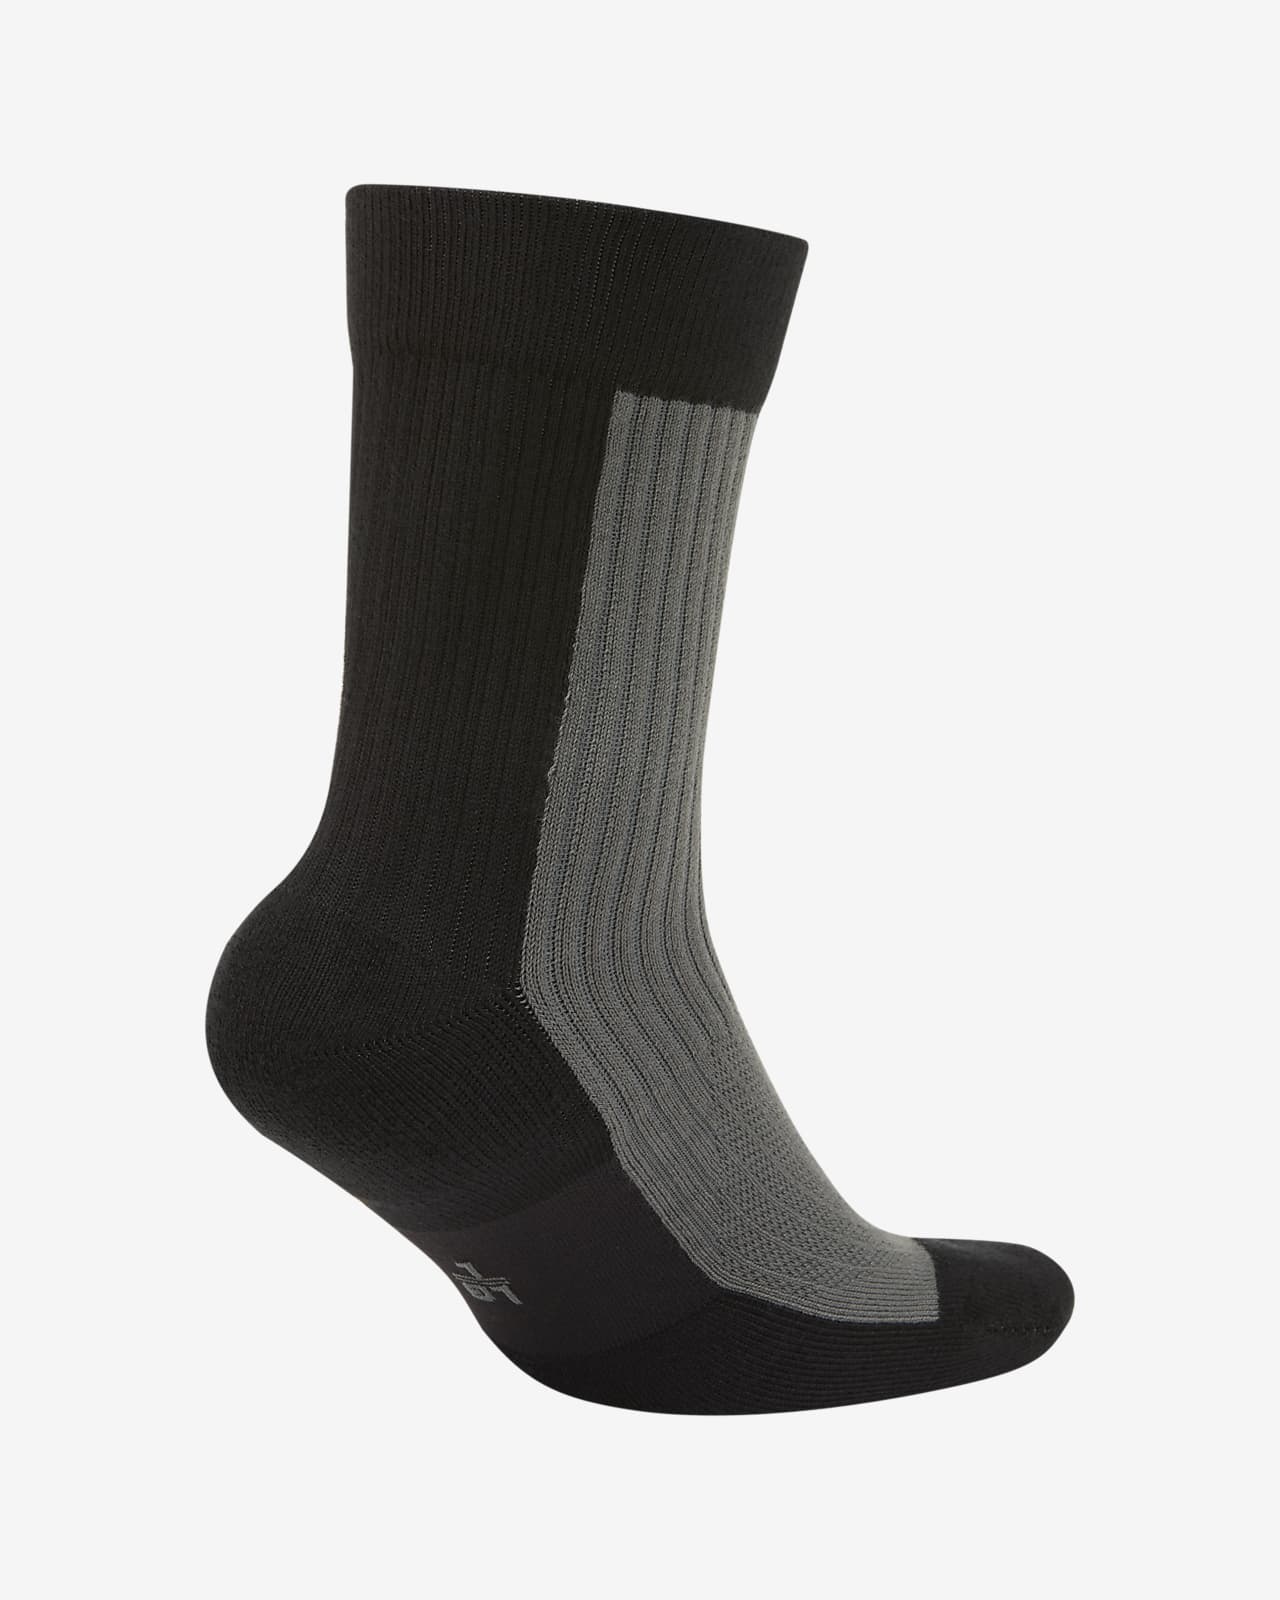 nike air max socks black